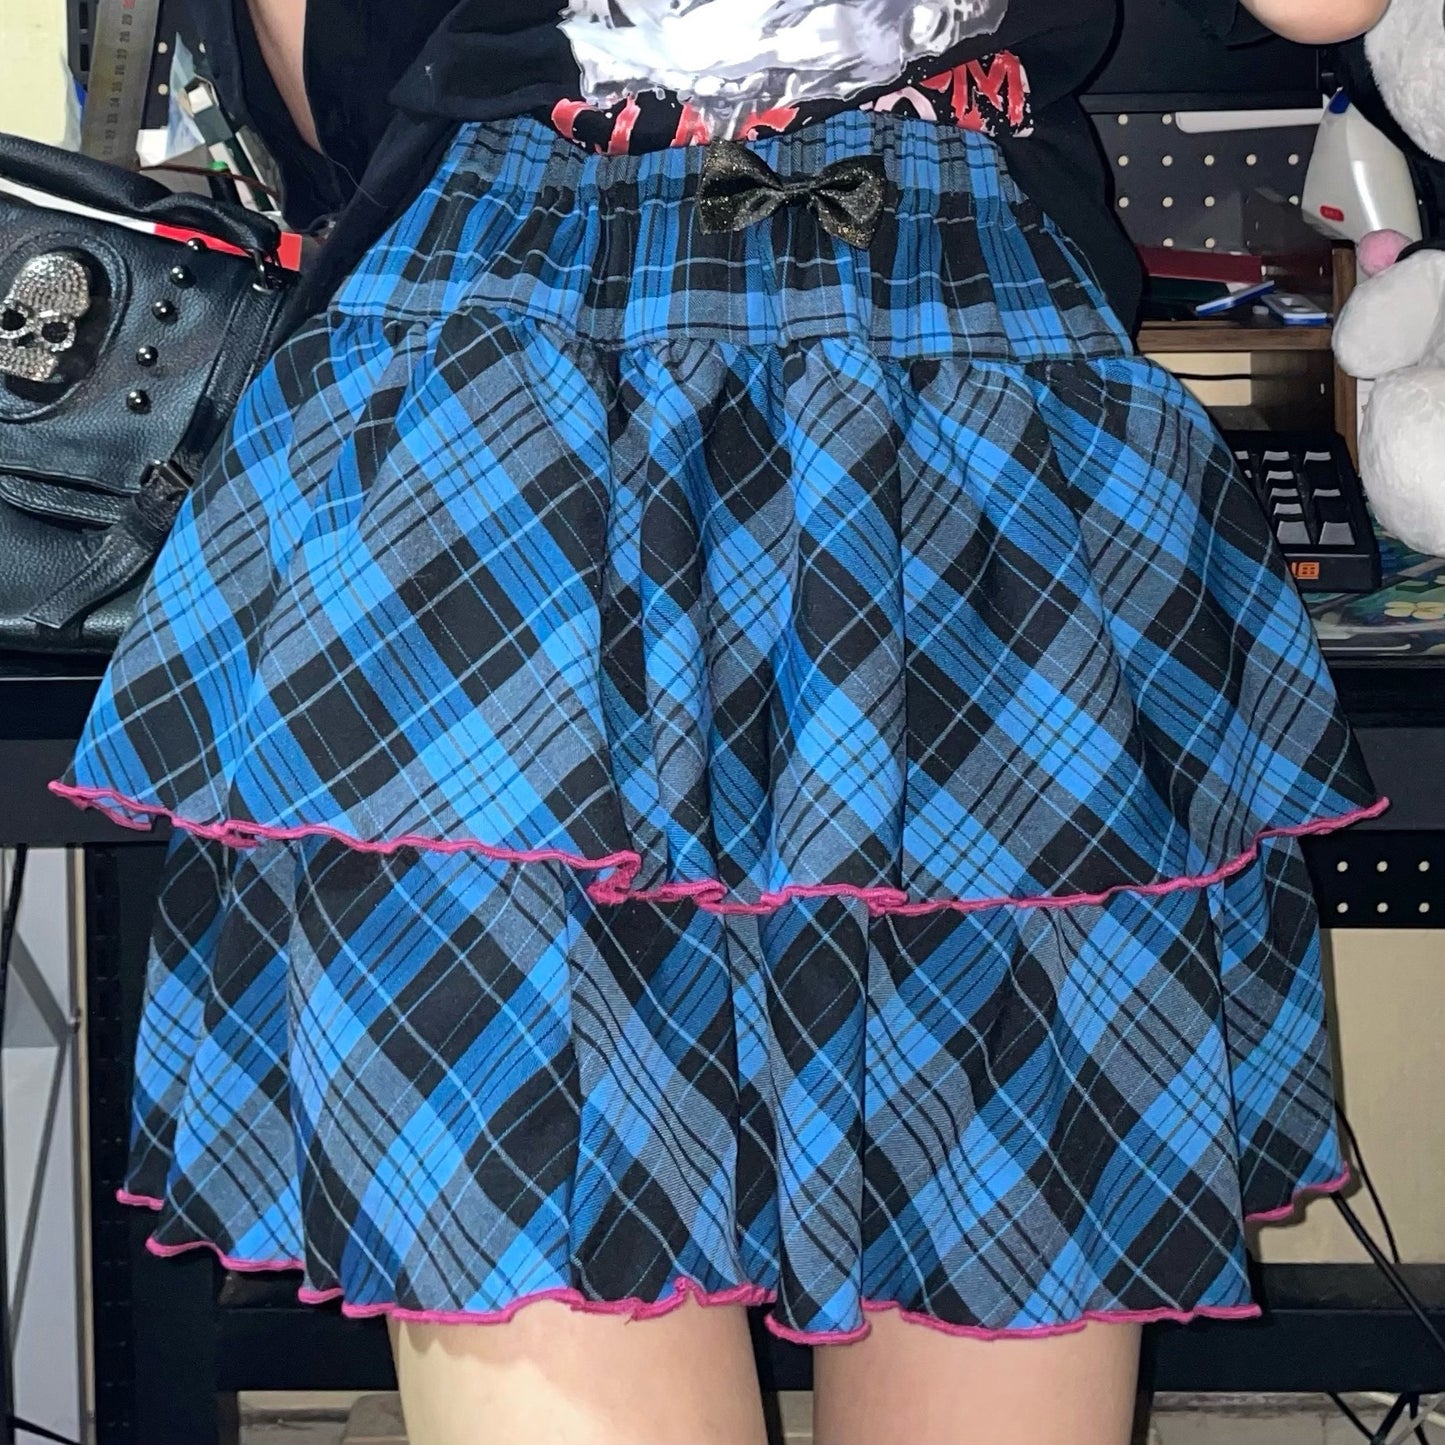 Punk Plaid Skirt Pink Blue Skirt Bow Layered Ruffle Skirt (L M) 33818:445980